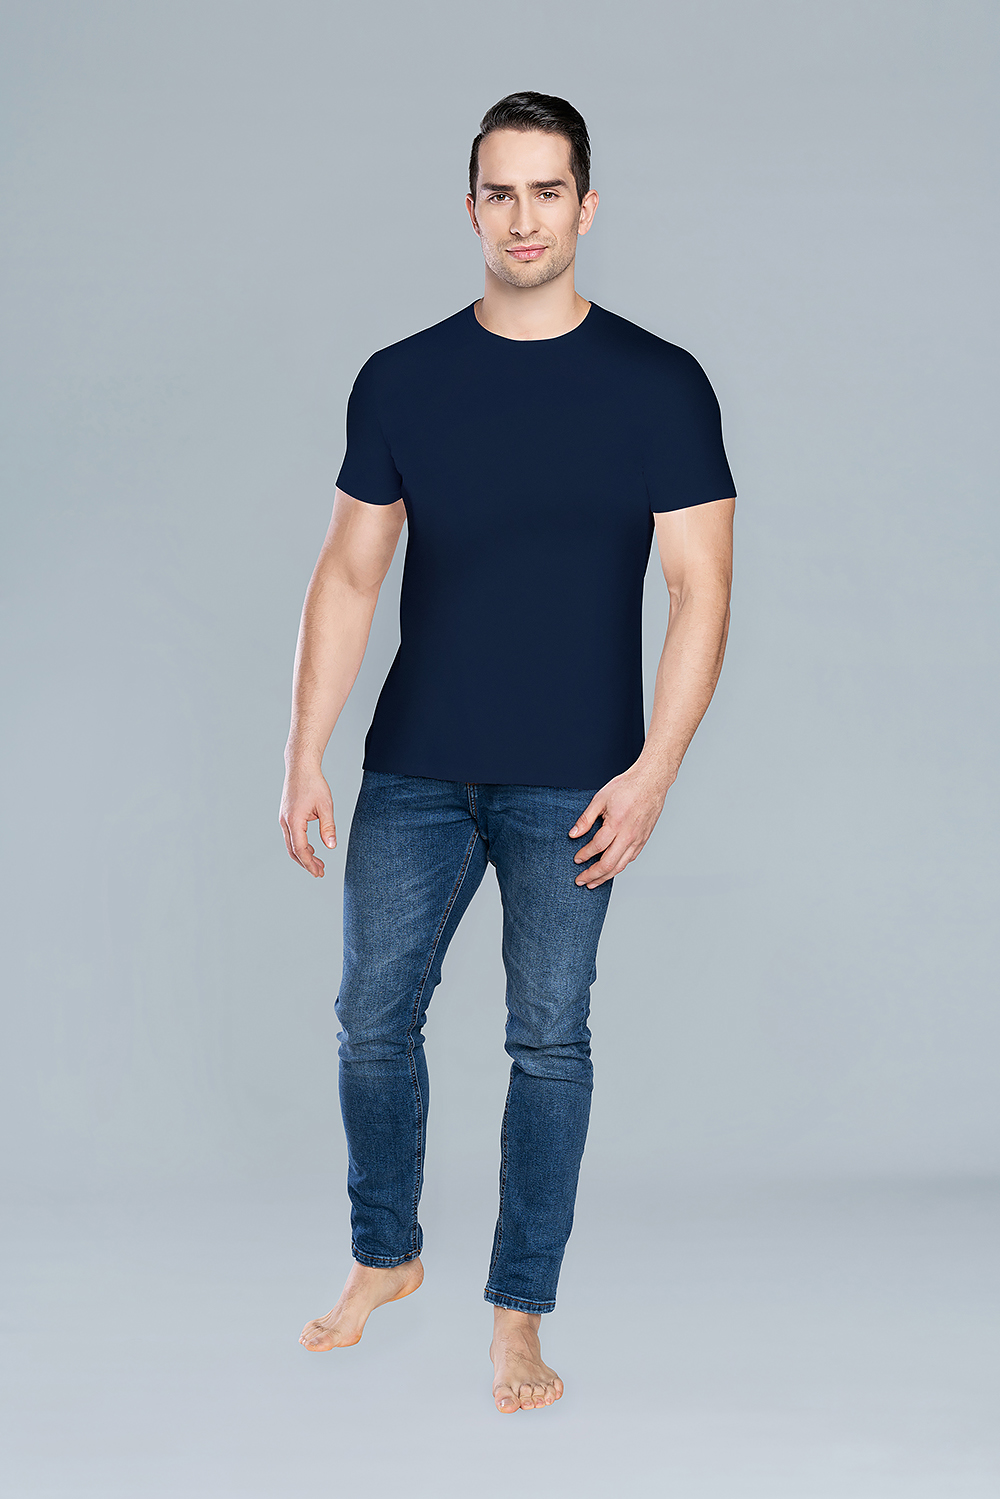 Ikar T-shirt with short sleeves - dark blue